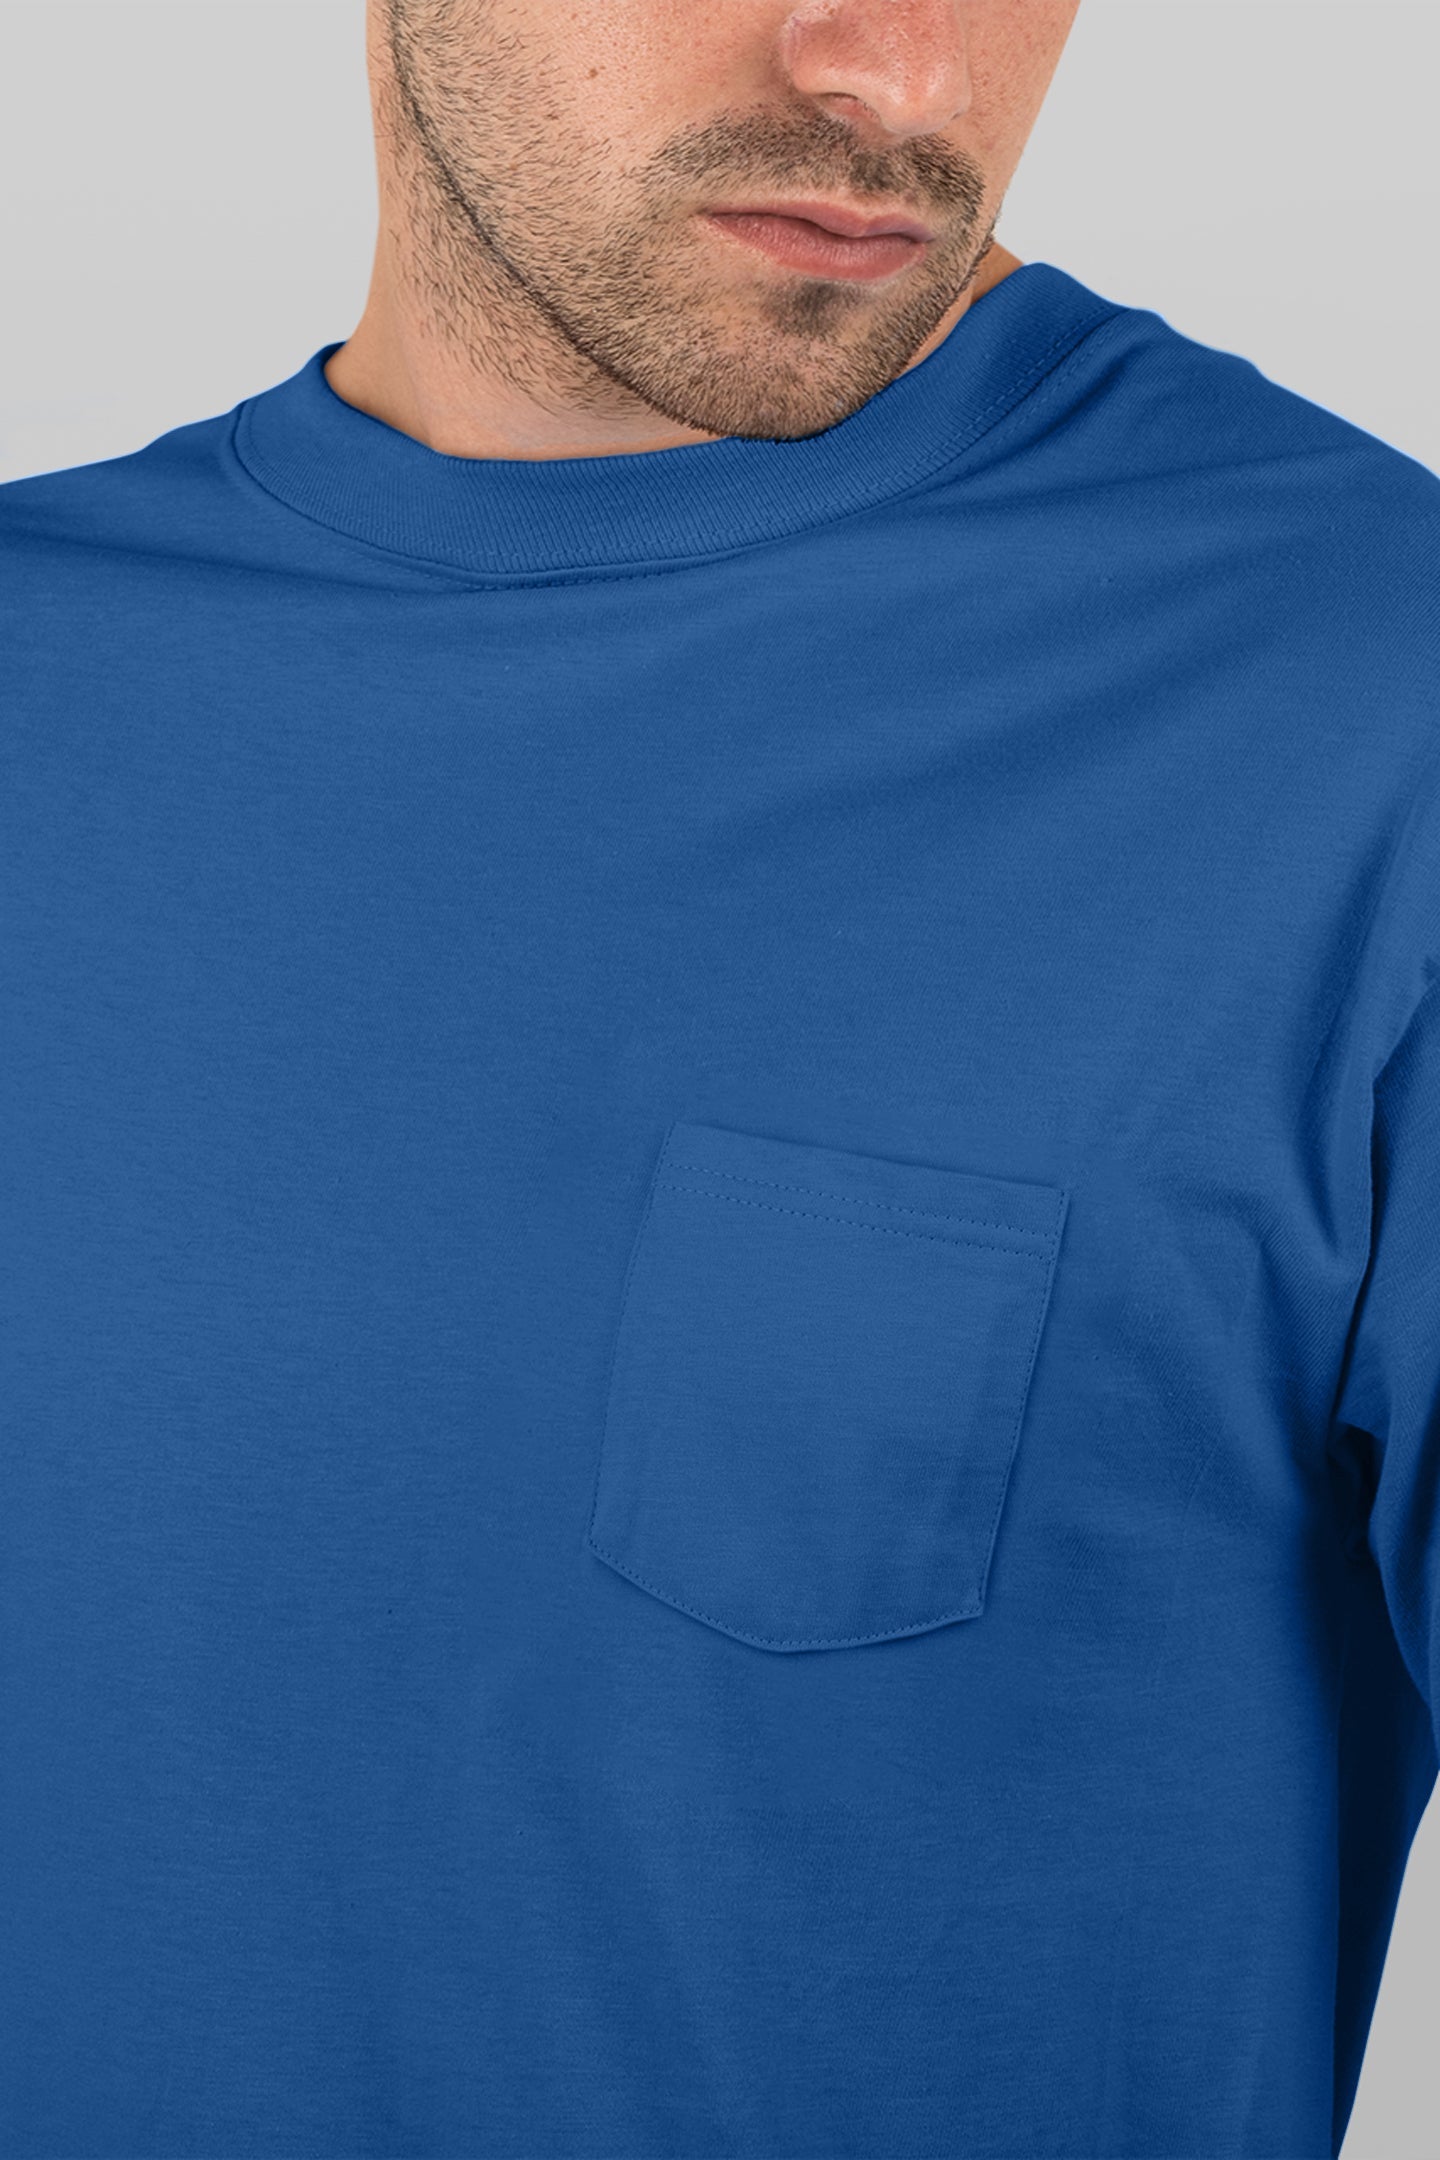 Baliza Men's 100% Cotton Round Neck T-shirt- Royal Blue